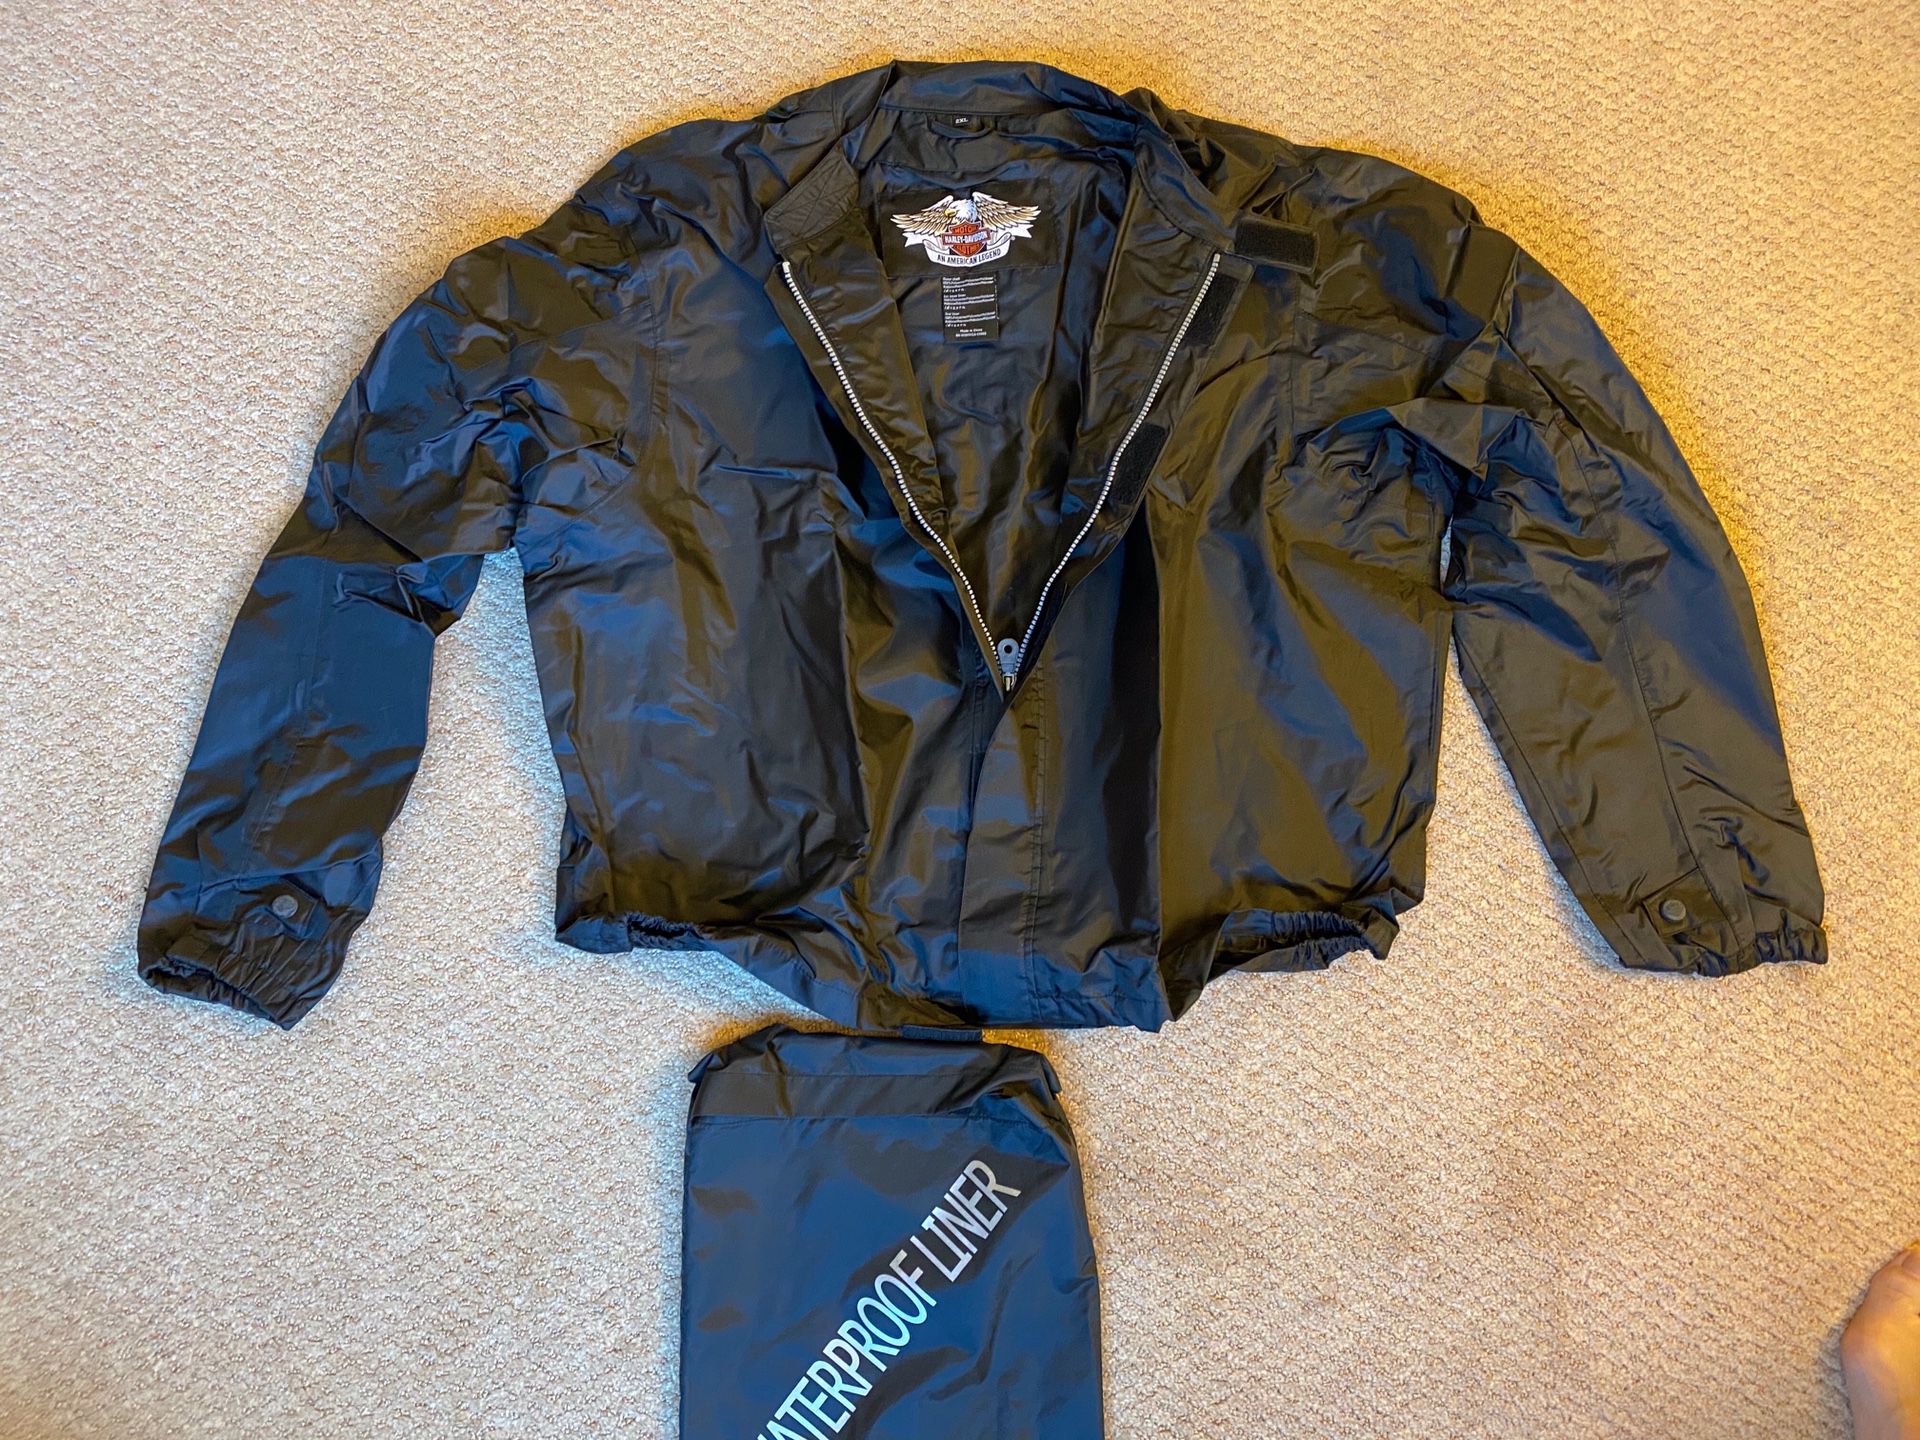 Harley Davidson rain Jacket Waterproof - Condition is MINT!!